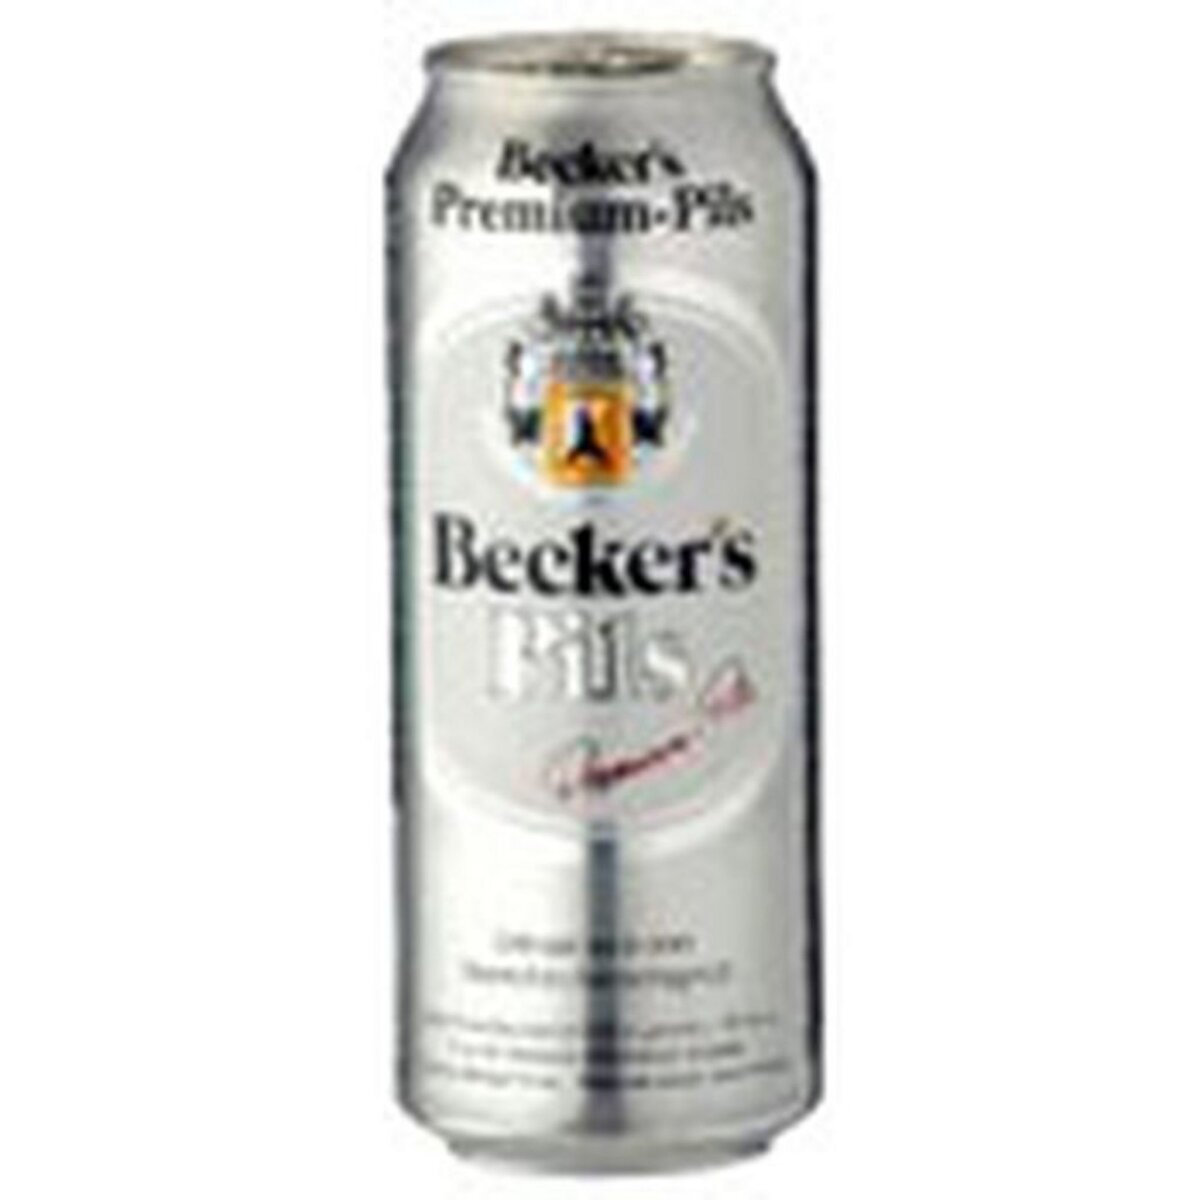 BECKER'S Bière blonde 4,9% boîte 50cl